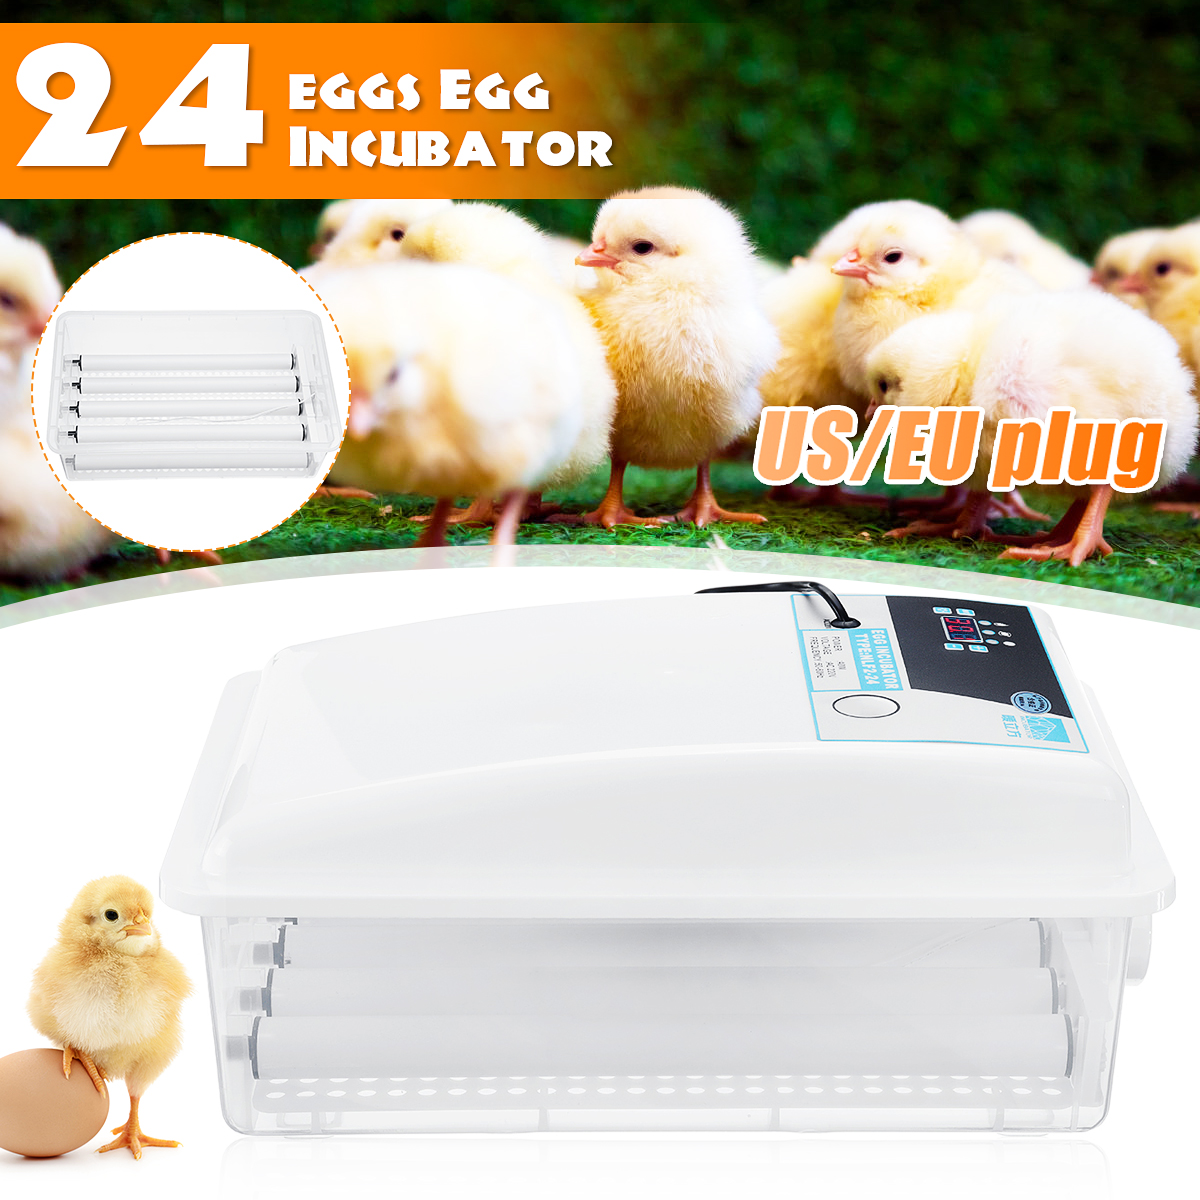 Digital-24-Egg-Auto-Turning-Incubator-Chicken-Poultry-Alarm-Hatcher-W-Flashlight-1514694-1